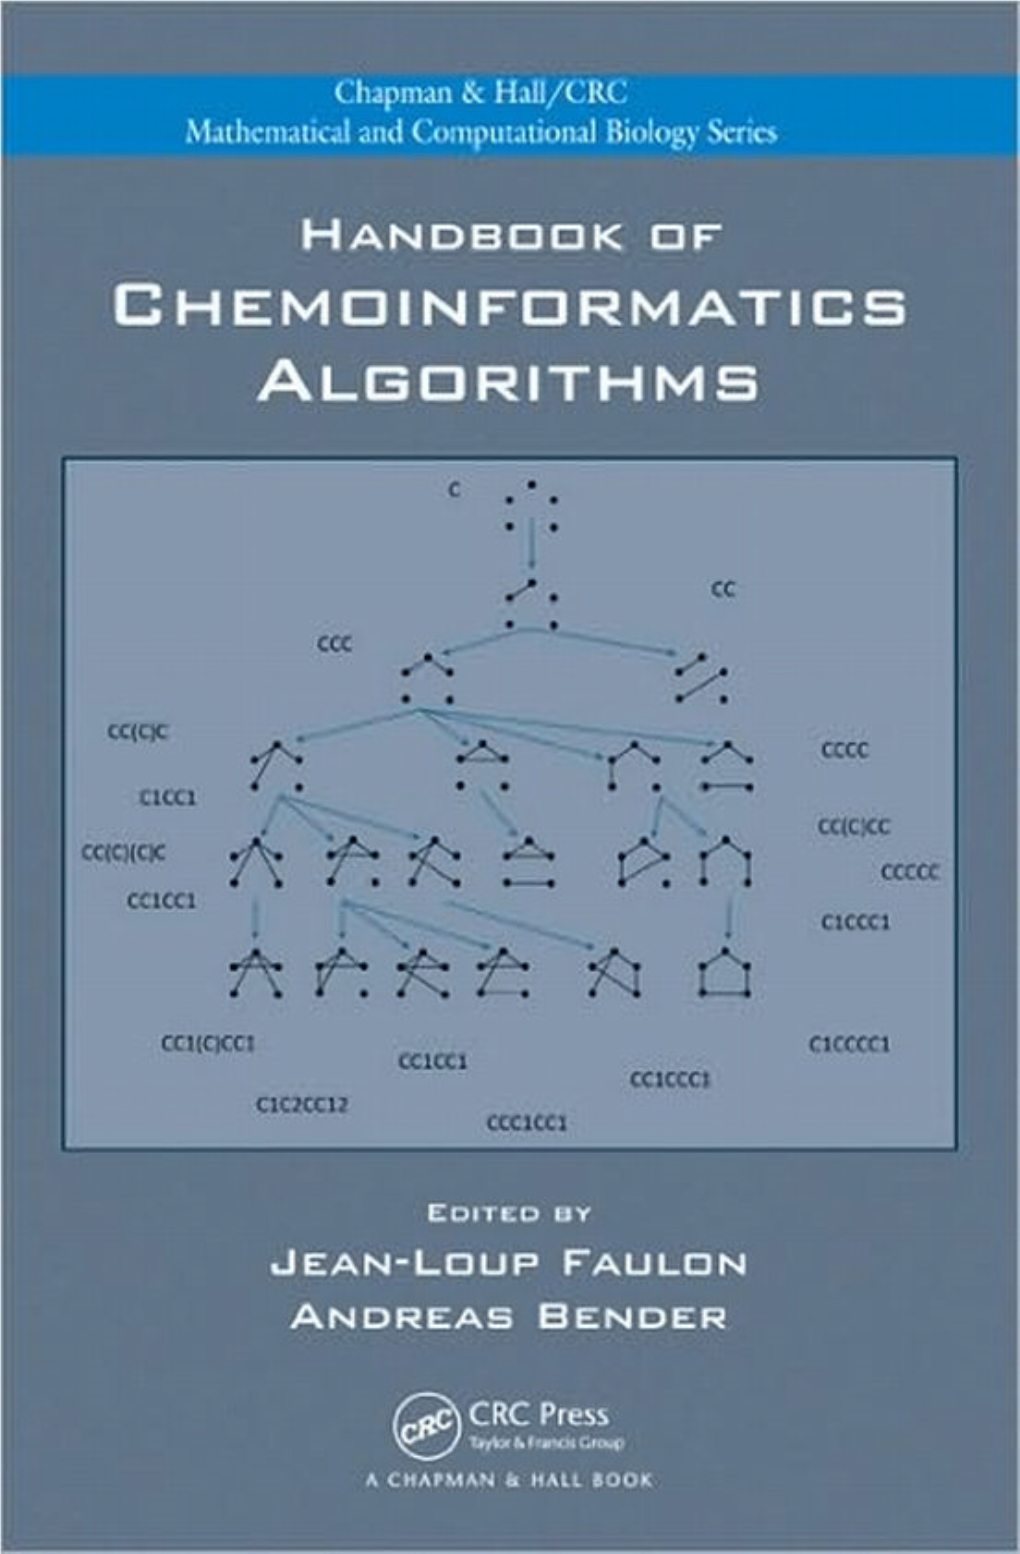 Handbook of Chemoinformatics Algorithms / Editors, Jean-Loup Faulon, Andreas Bender